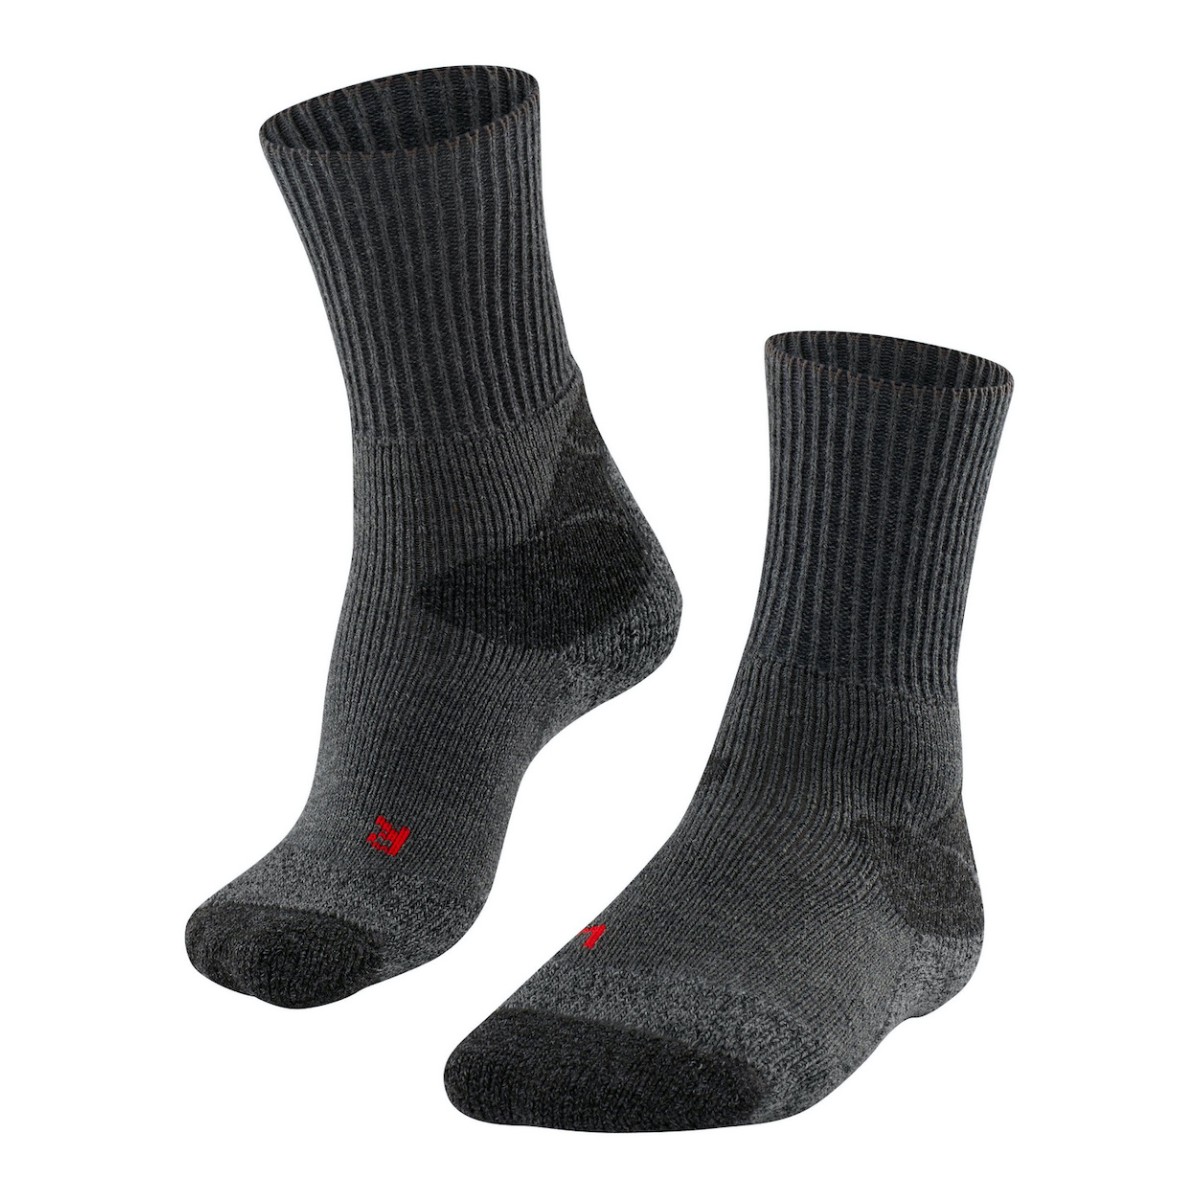 FALKE TK-X EXPEDITION socks - asphalt mel